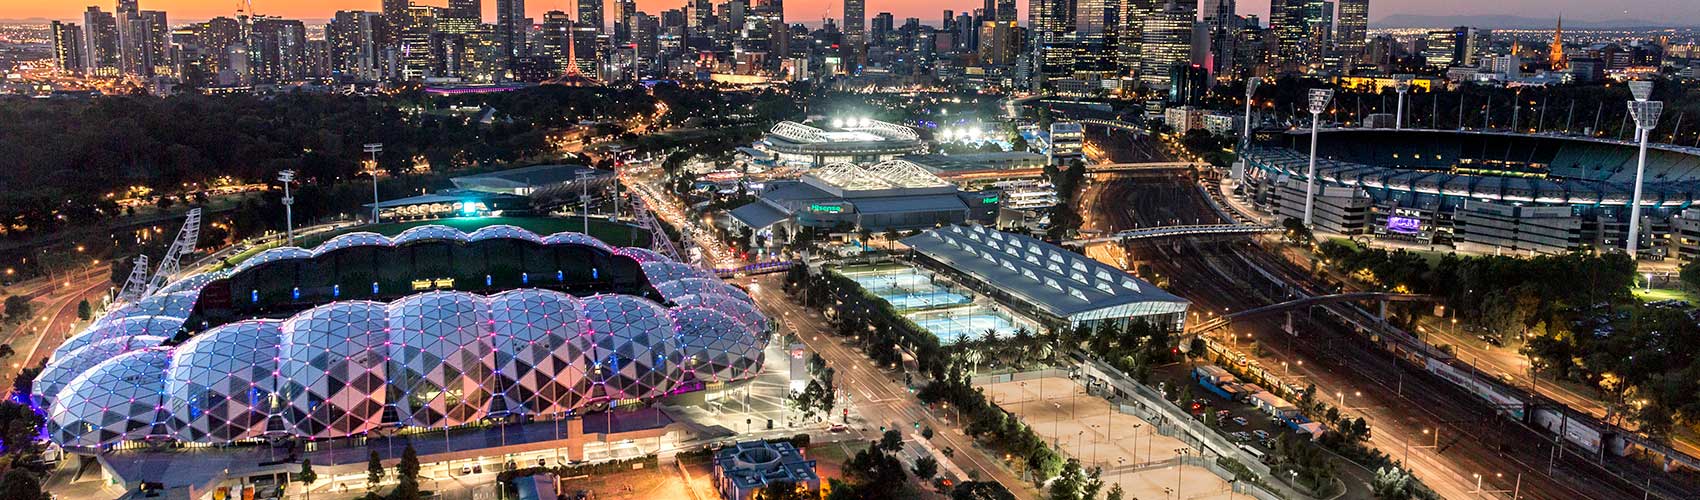 Aerial view of Melbourne's Sports Precinct